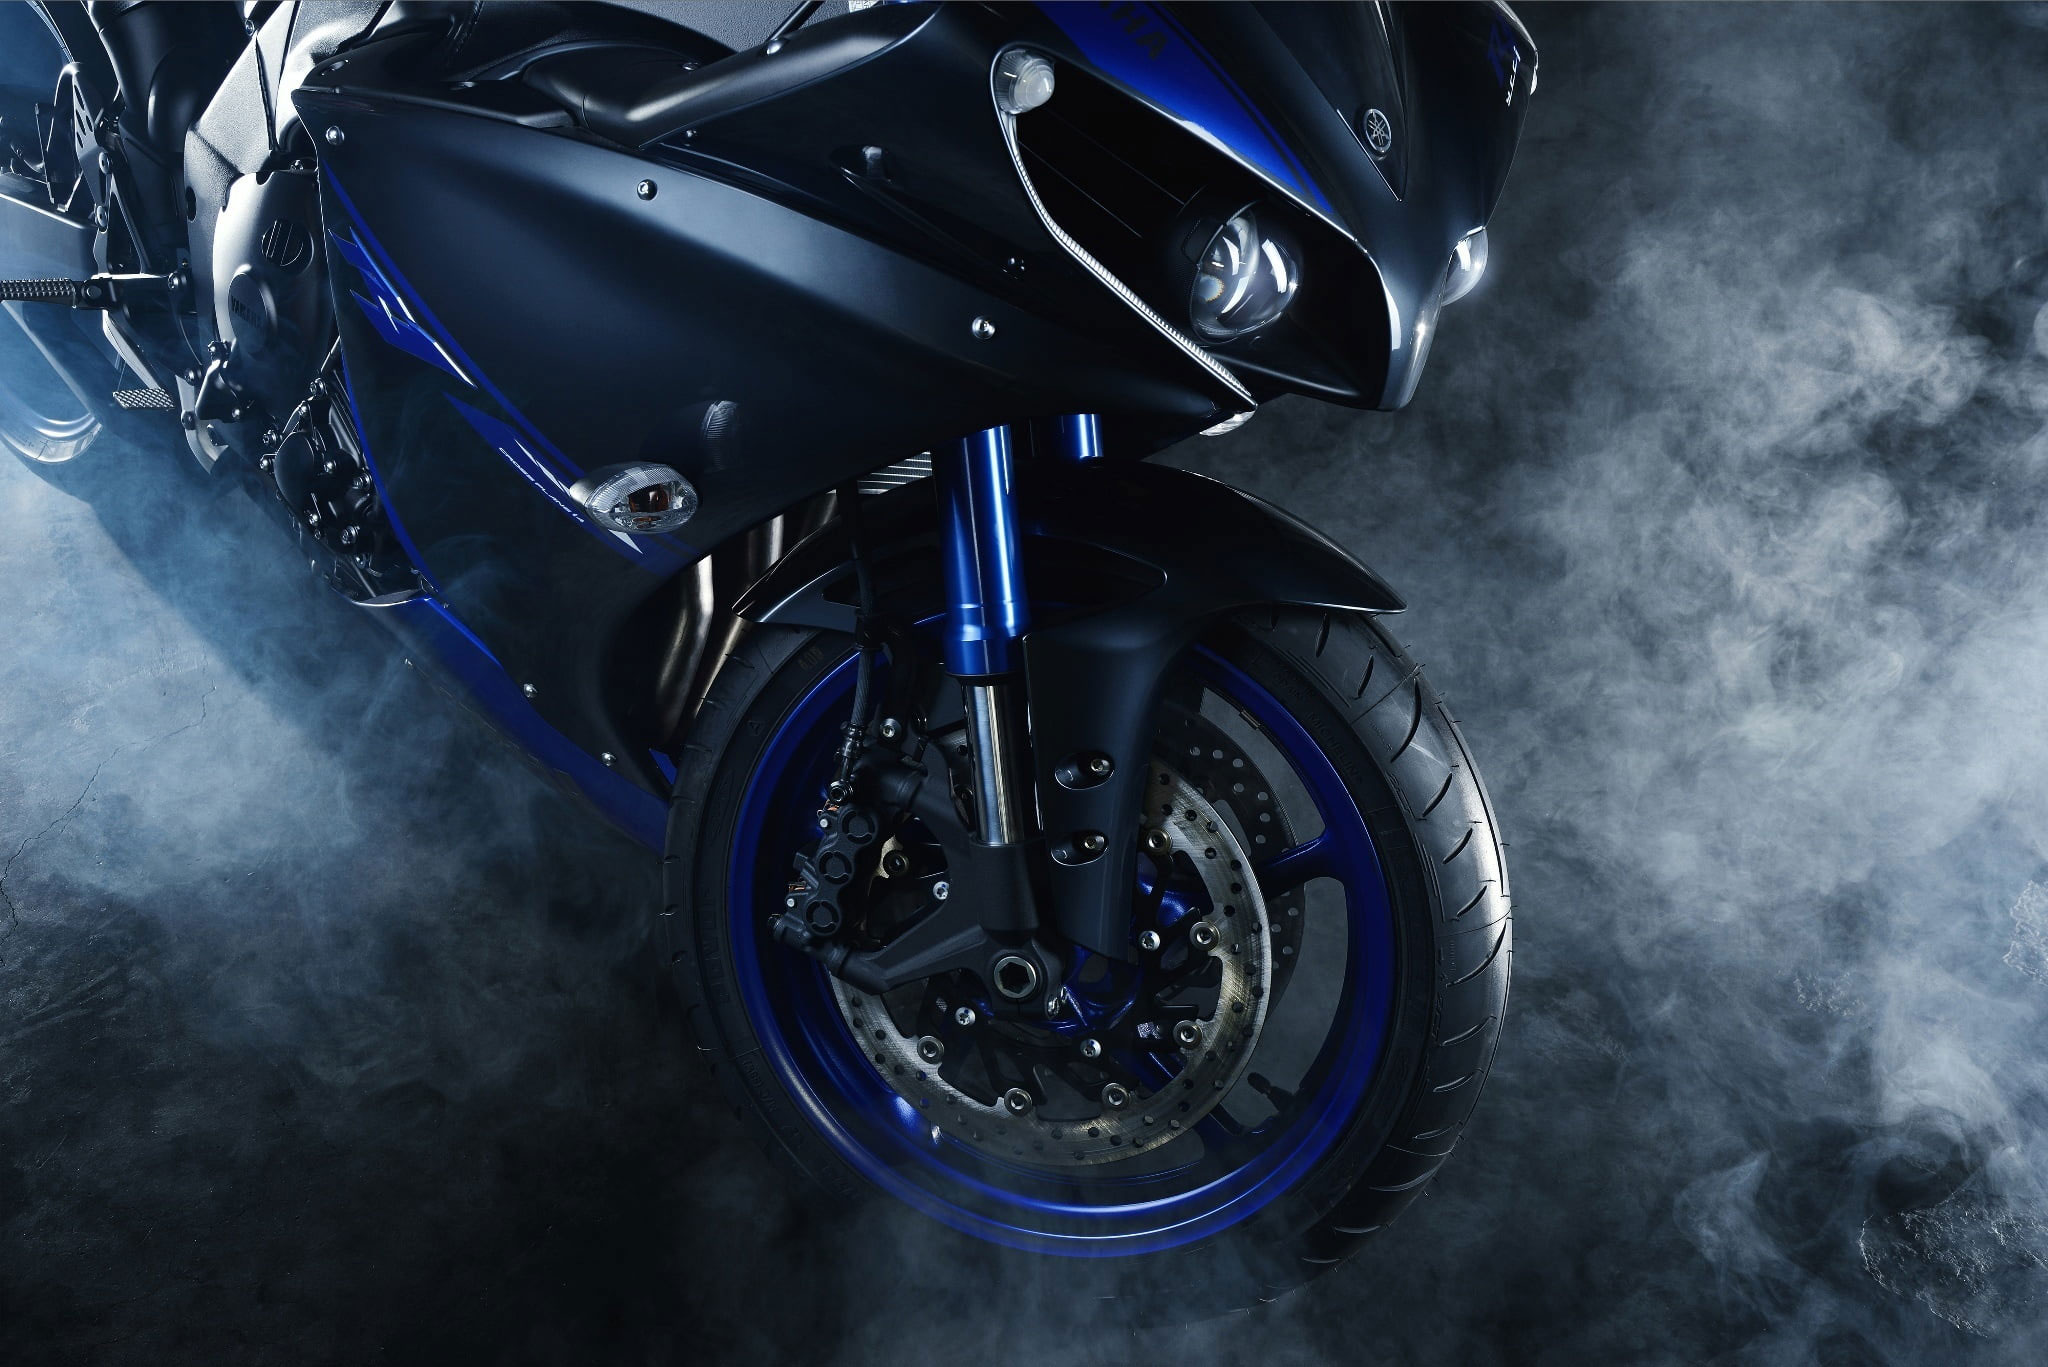 Black And Blue Sports Bike Wallpaper, Motorcycle, Motorbike, Yamaha YZF